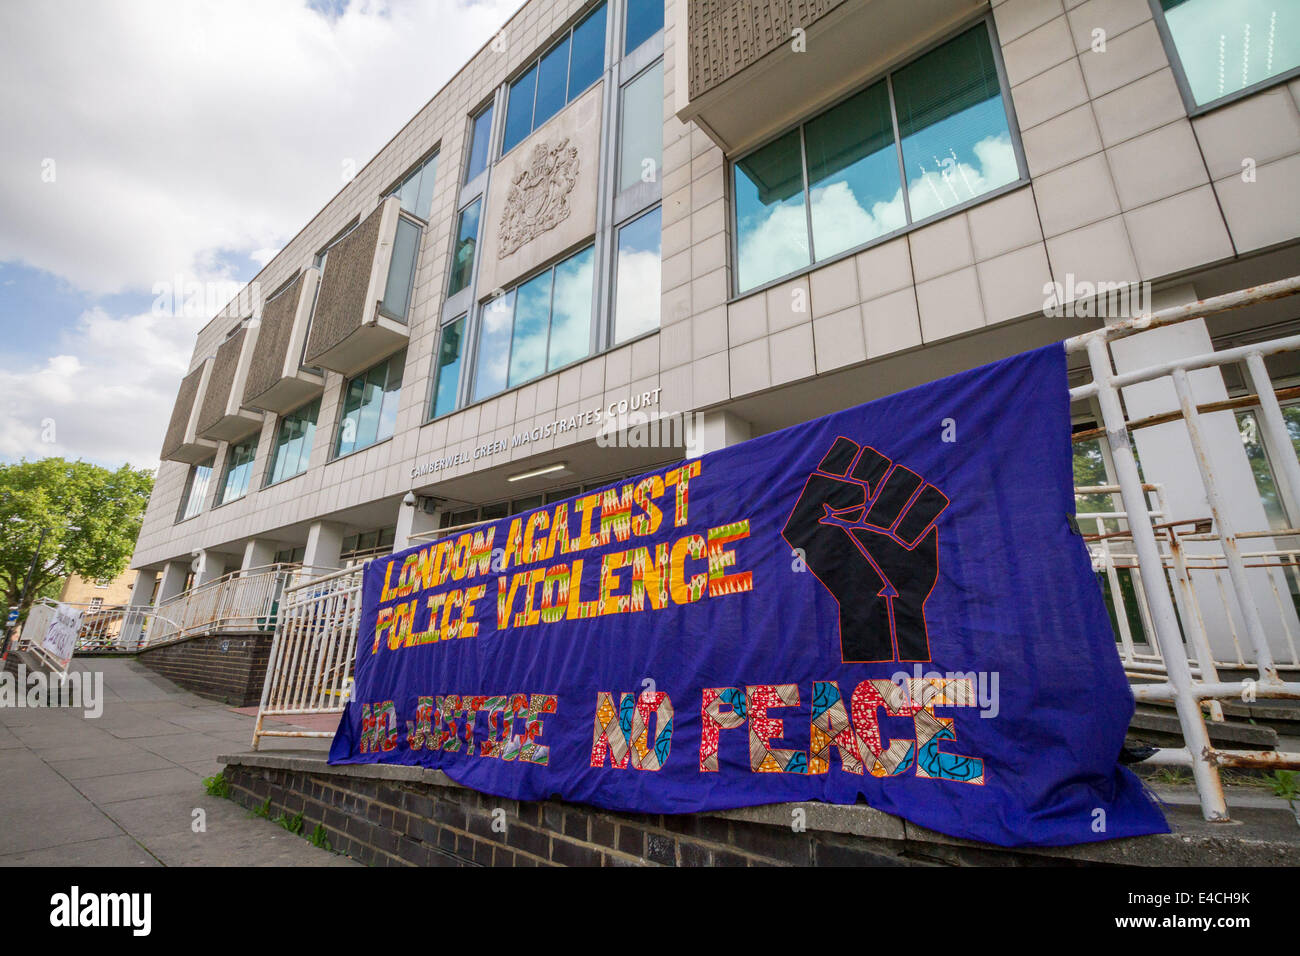 London, UK. 8. Juli 2014. Protest gegen Polizeigewalt in Camberwell Green Magistrates Court in London Credit: Guy Corbishley/Alamy Live News Stockfoto